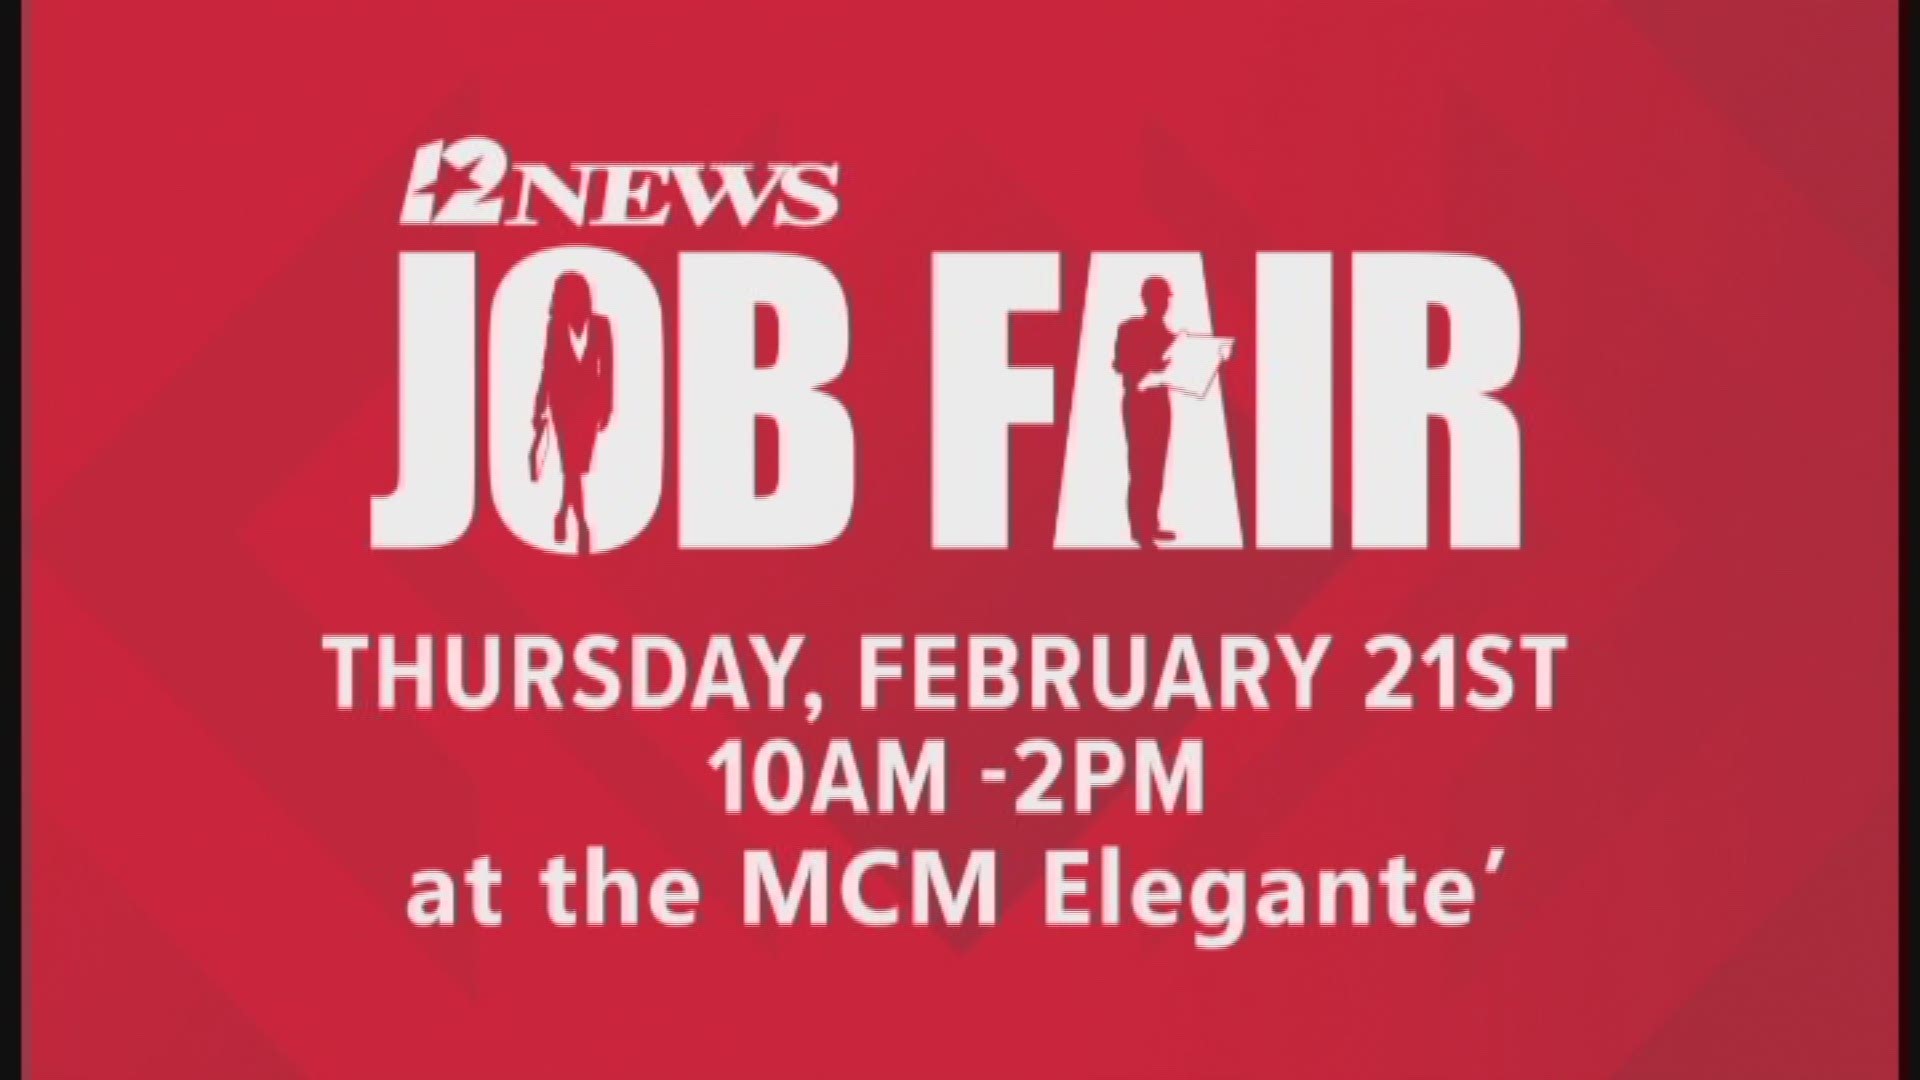 Don't miss the 2019 12News Job Fair this February